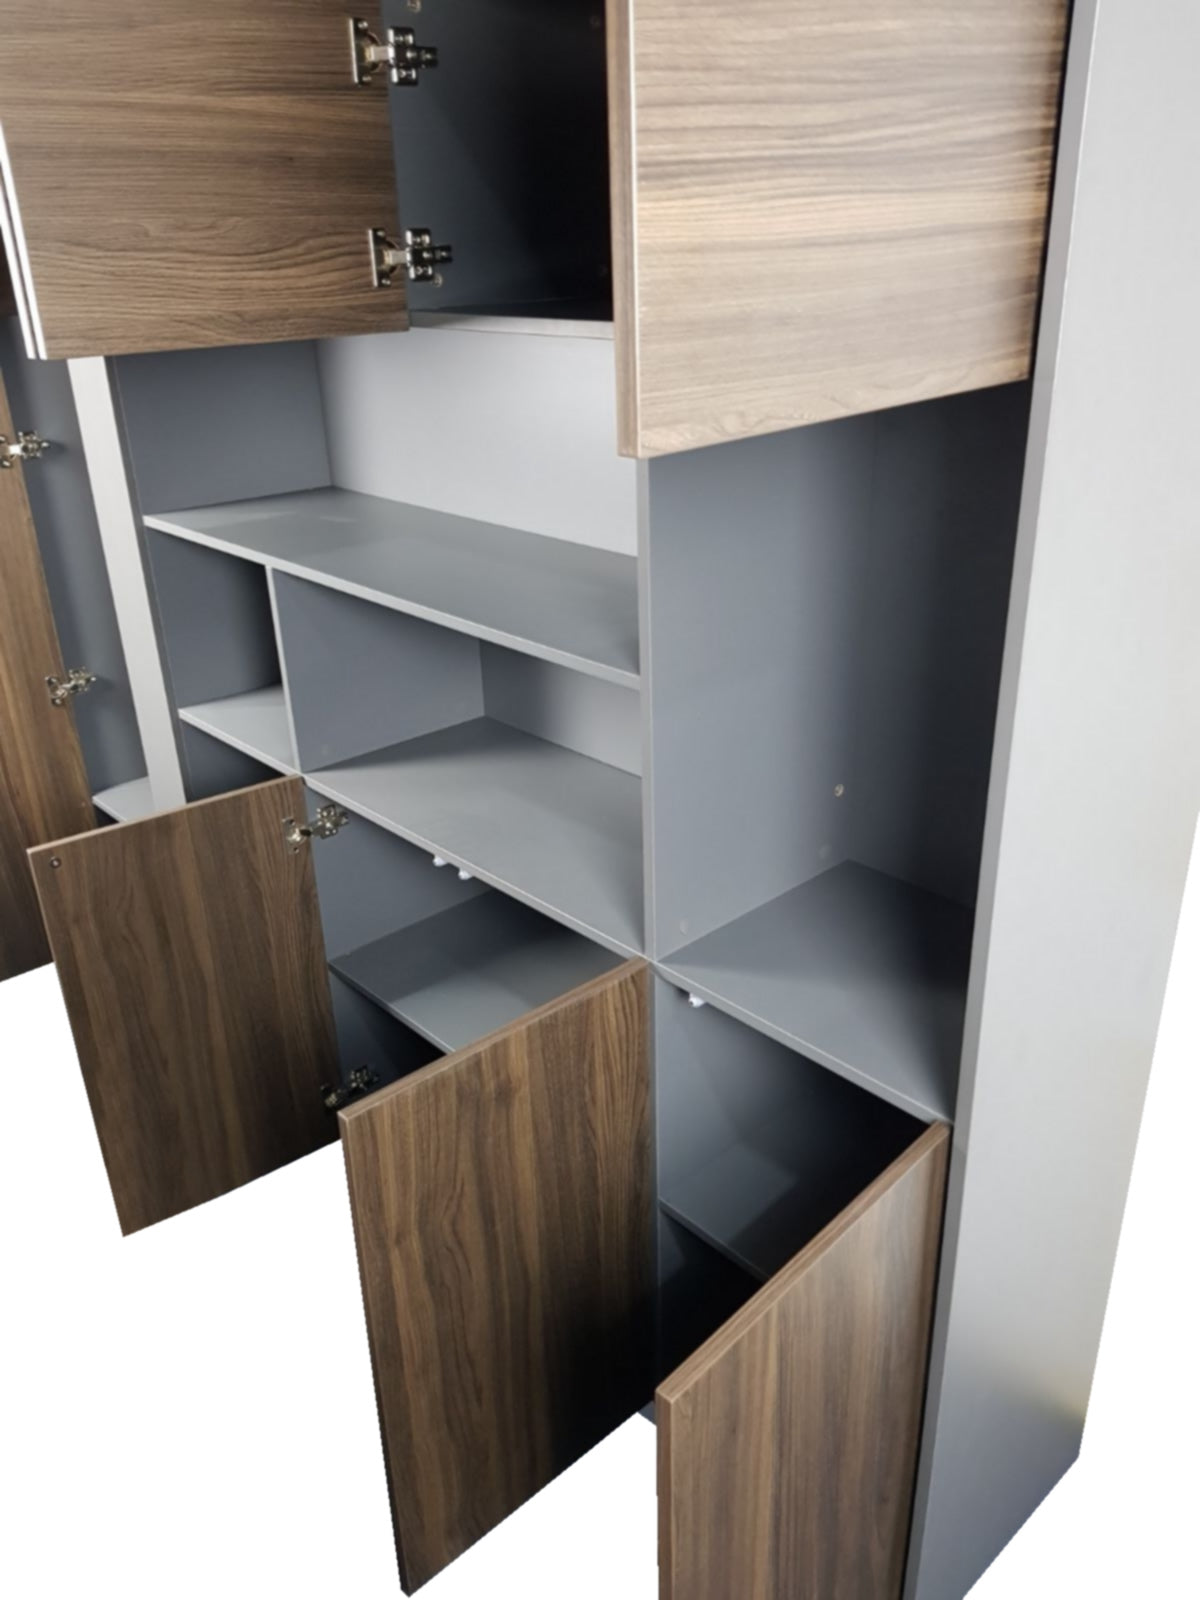 Quality Executive Office Bookcase Walnut with Grey - ZGCI2204